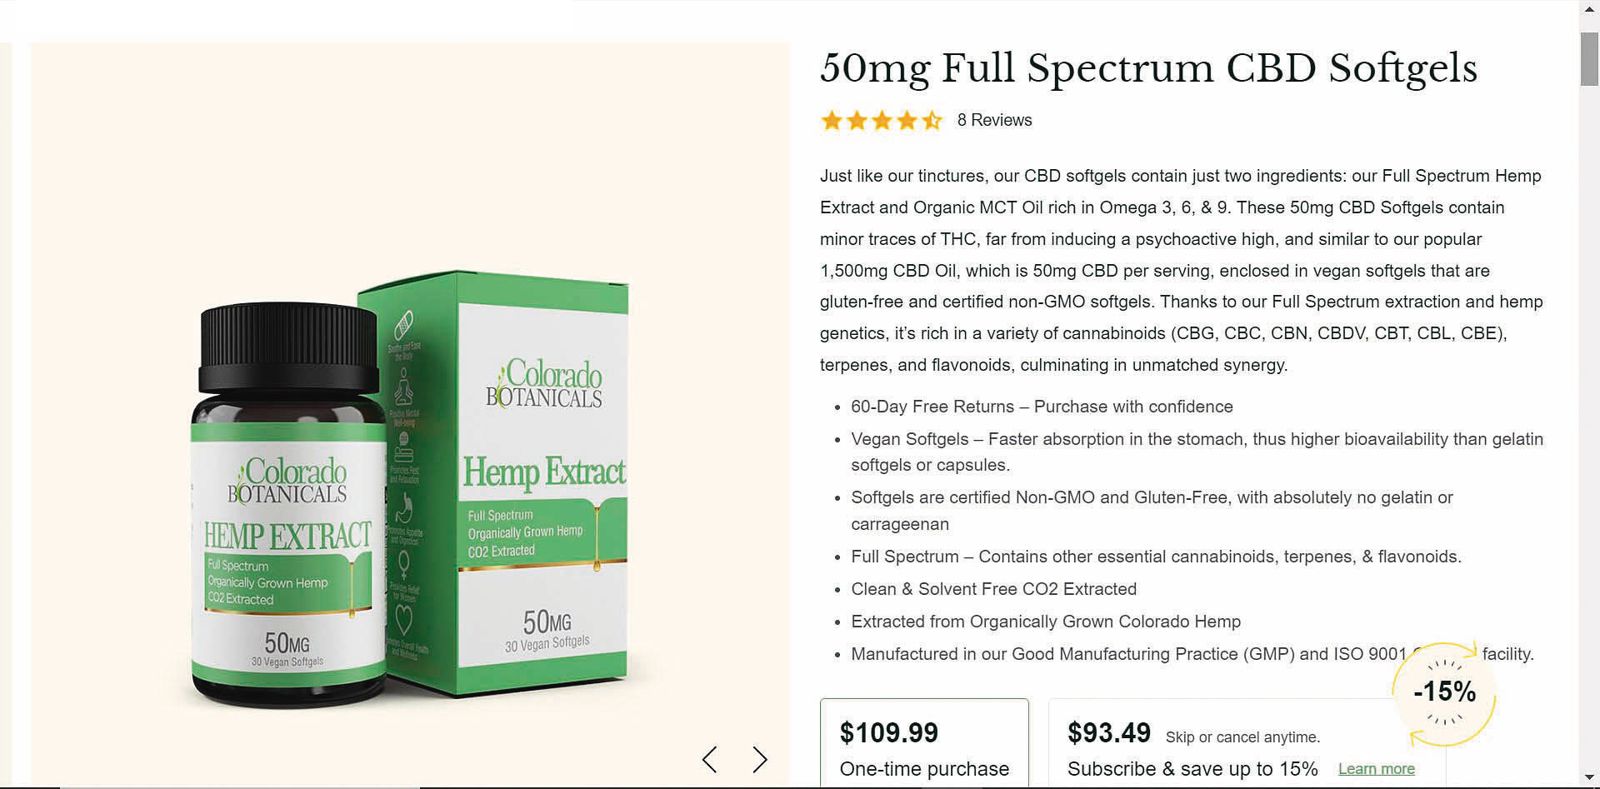 「Colorado Botanicals」的「Hemp Extract」膠囊含有大麻，也是殷琪買的物品。（讀者提供）